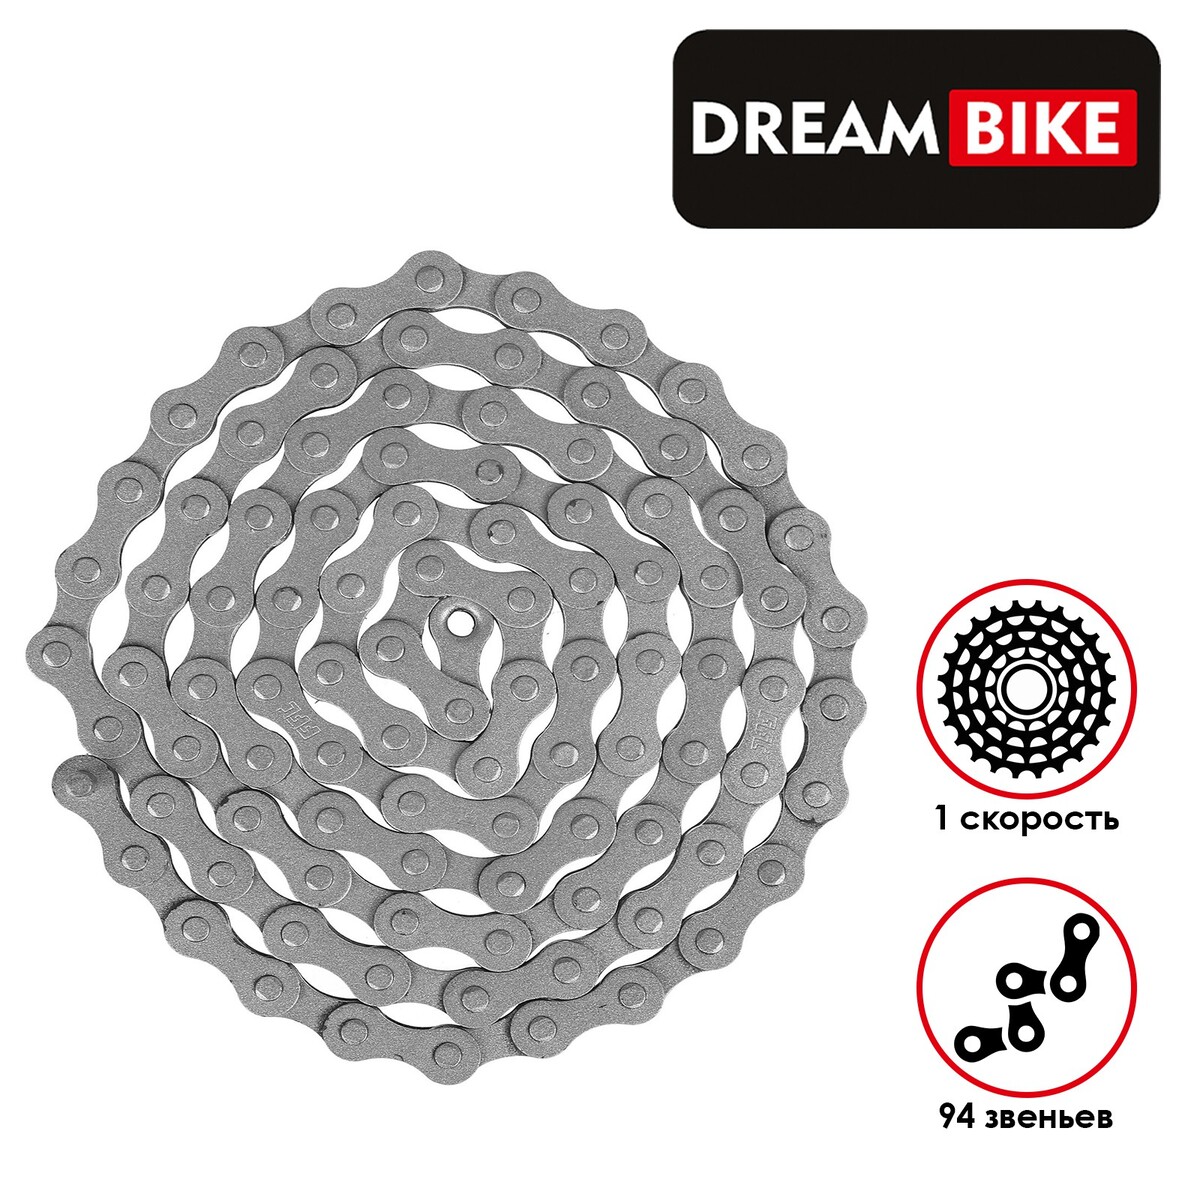 Цепь dream bike, 1 скорость Dream Bike, цвет серебристый